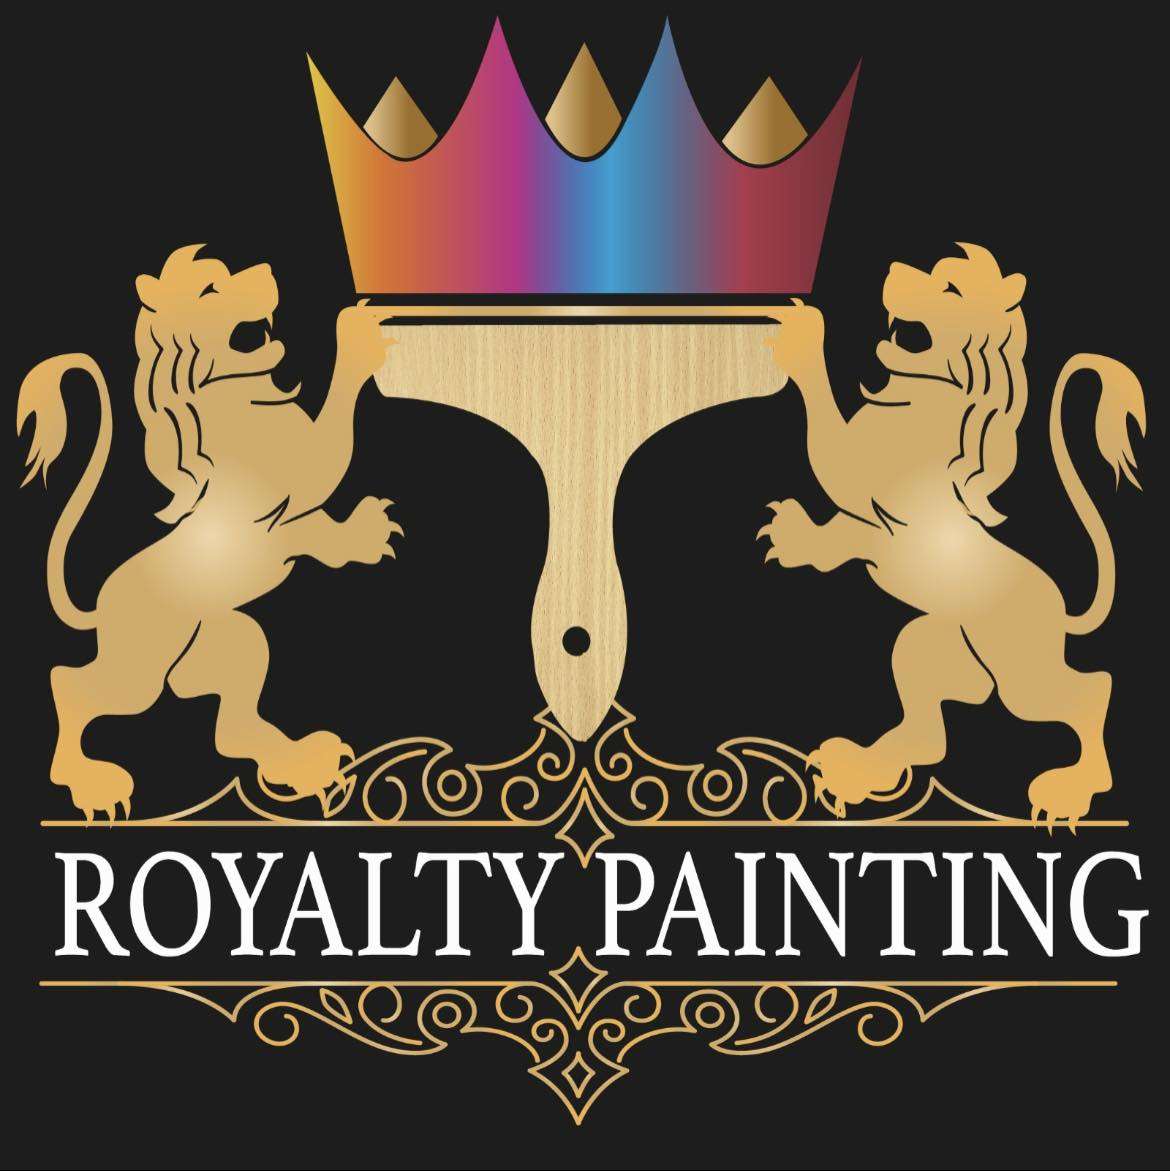 Royalty Painting, LLC Logo